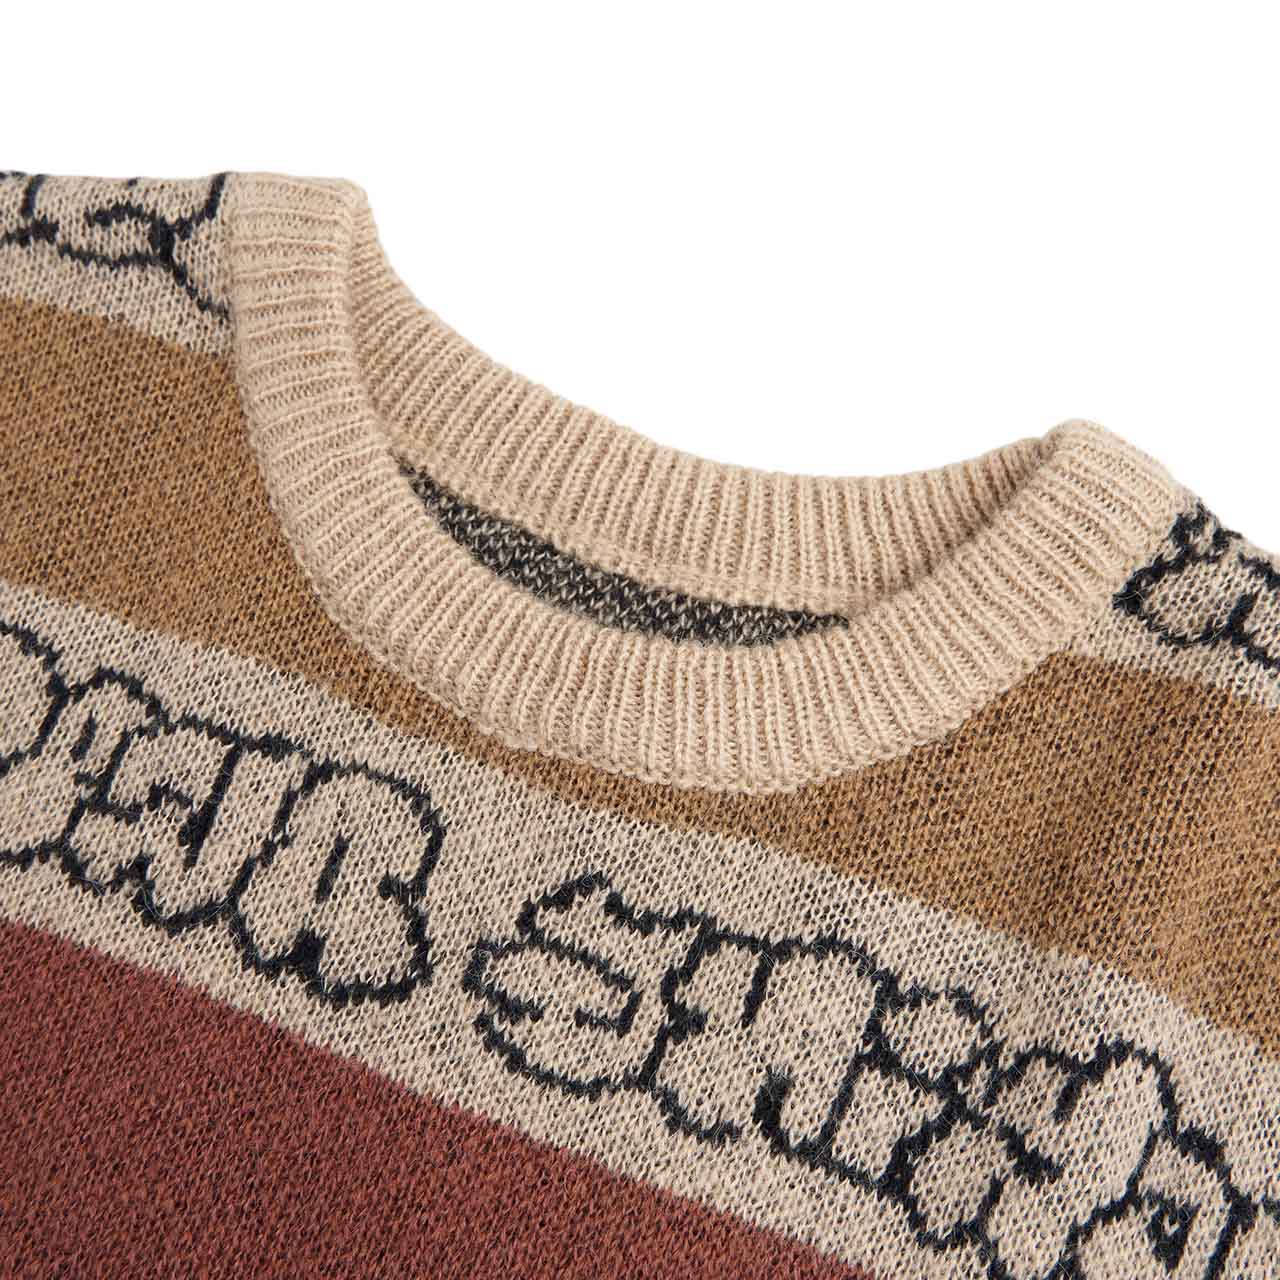 Brushed Jacquard Sweater in Brown/Multi